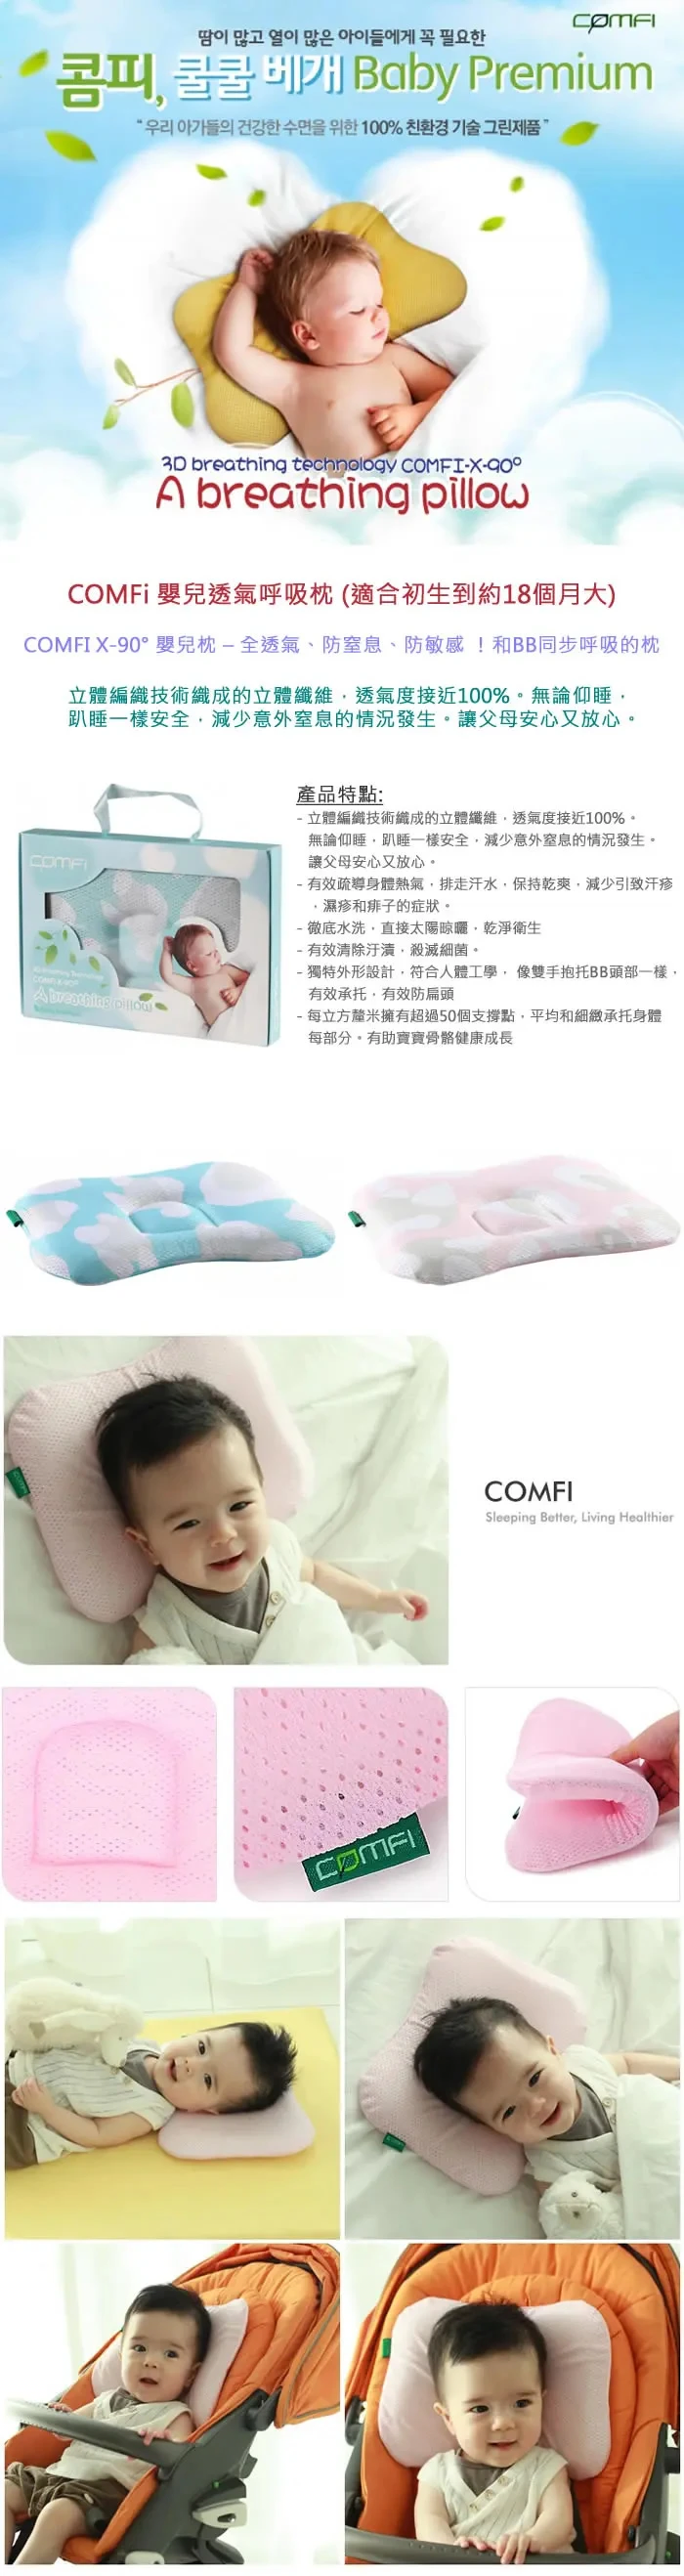 COMFI 婴儿呼吸定形枕(0至18个月)